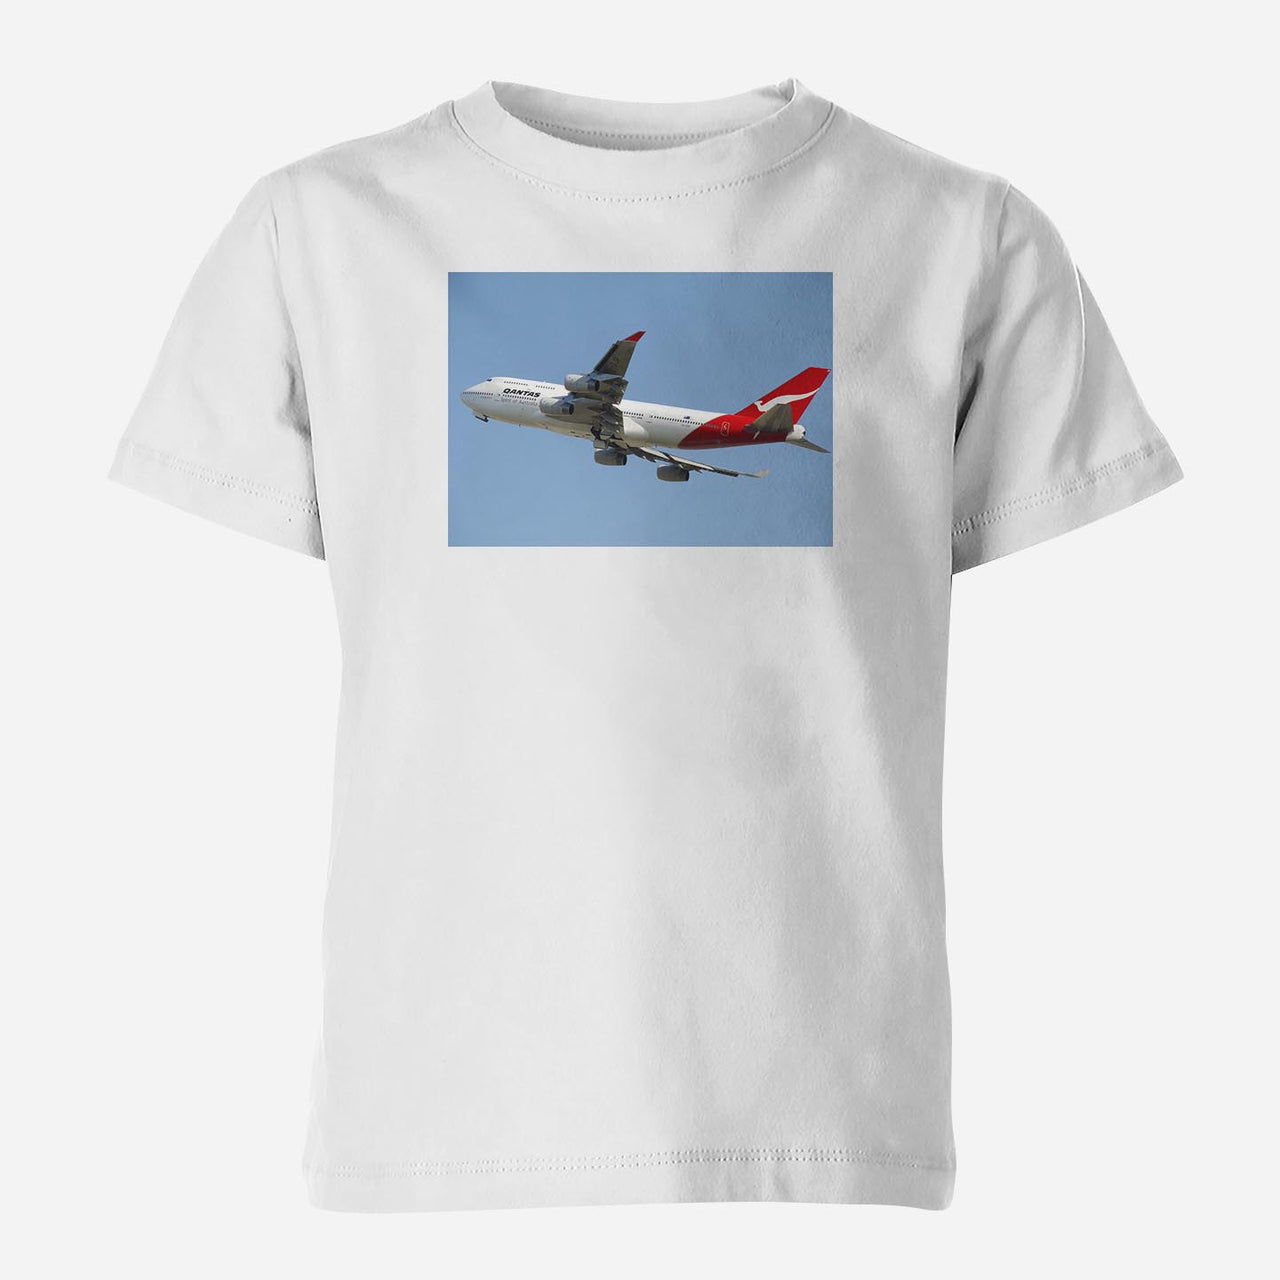 Departing Qantas Boeing 747 Designed Children T-Shirts